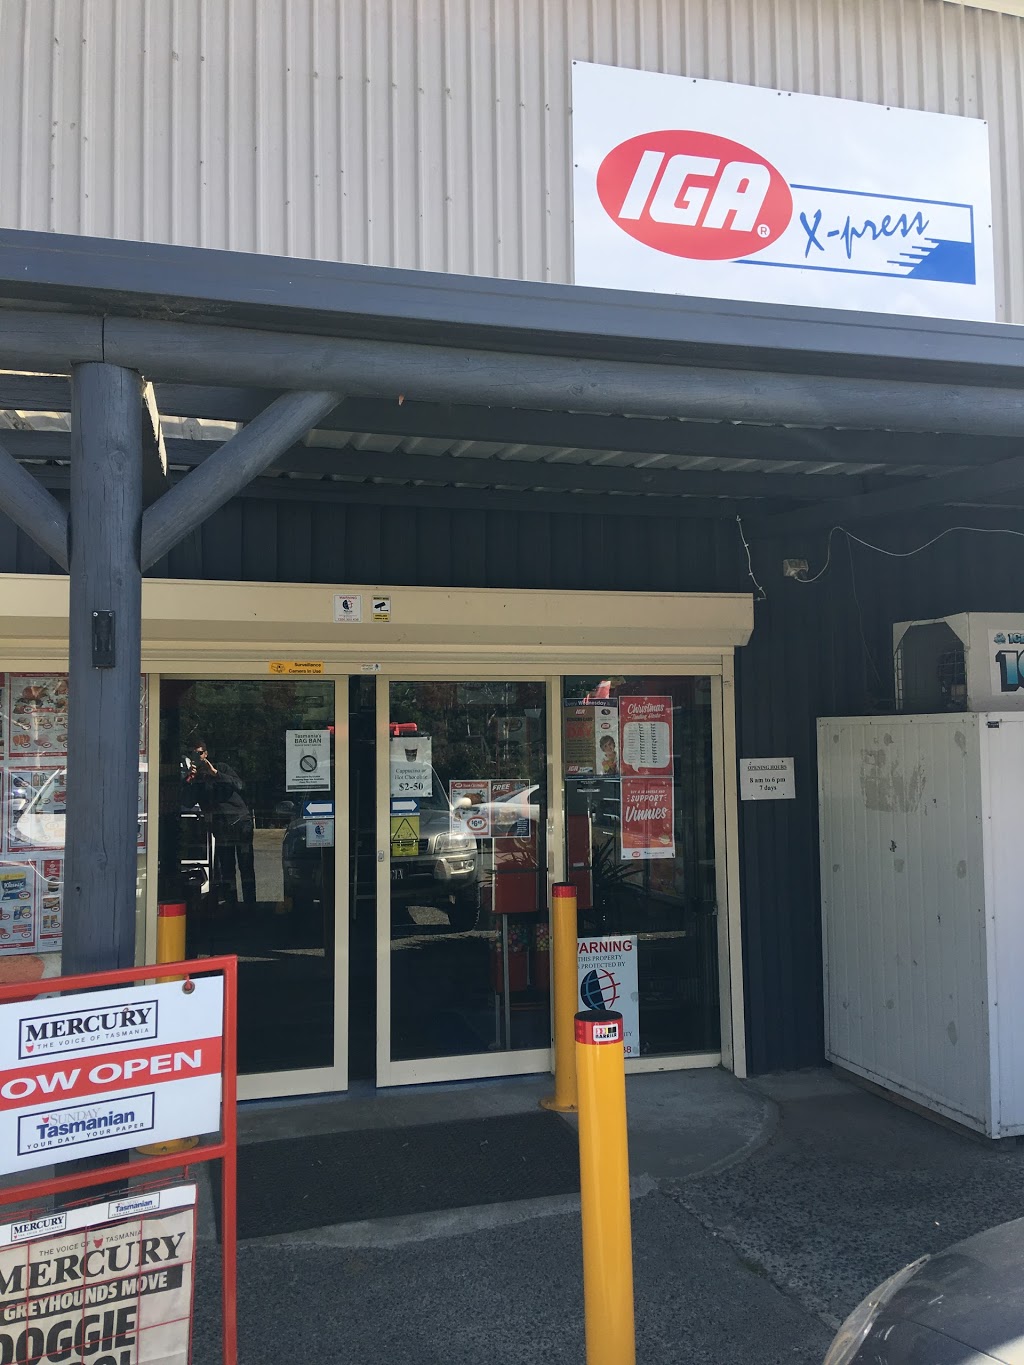 IGA X-press | supermarket | 1856 Main Rd, Nubeena TAS 7184, Australia | 0362501276 OR +61 3 6250 1276